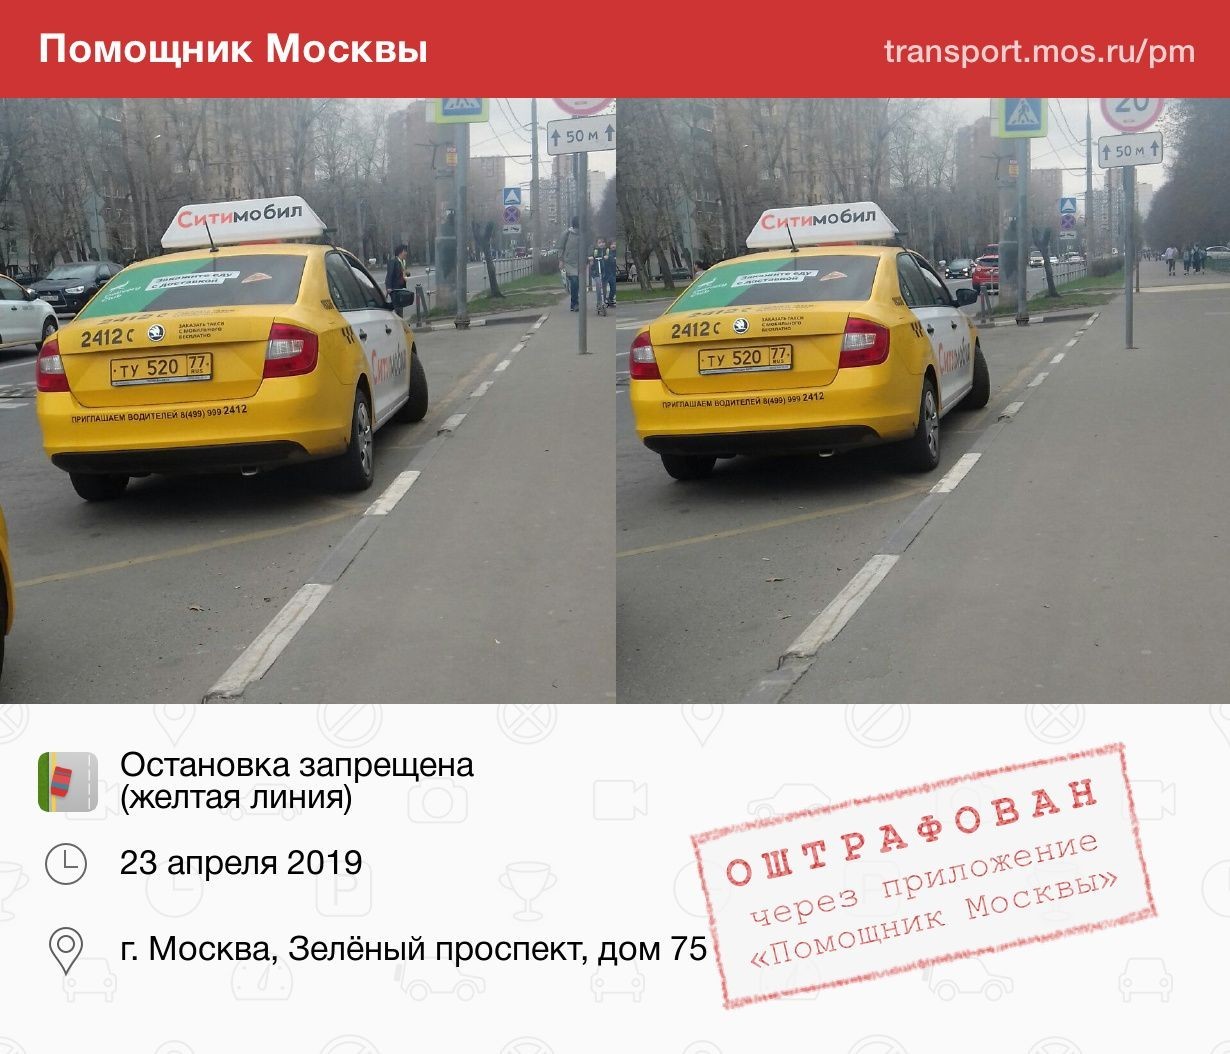 Остановка запрещена такси. ПДД такси. Помощник Москвы. Запрет такси. Такси желтая полоса.